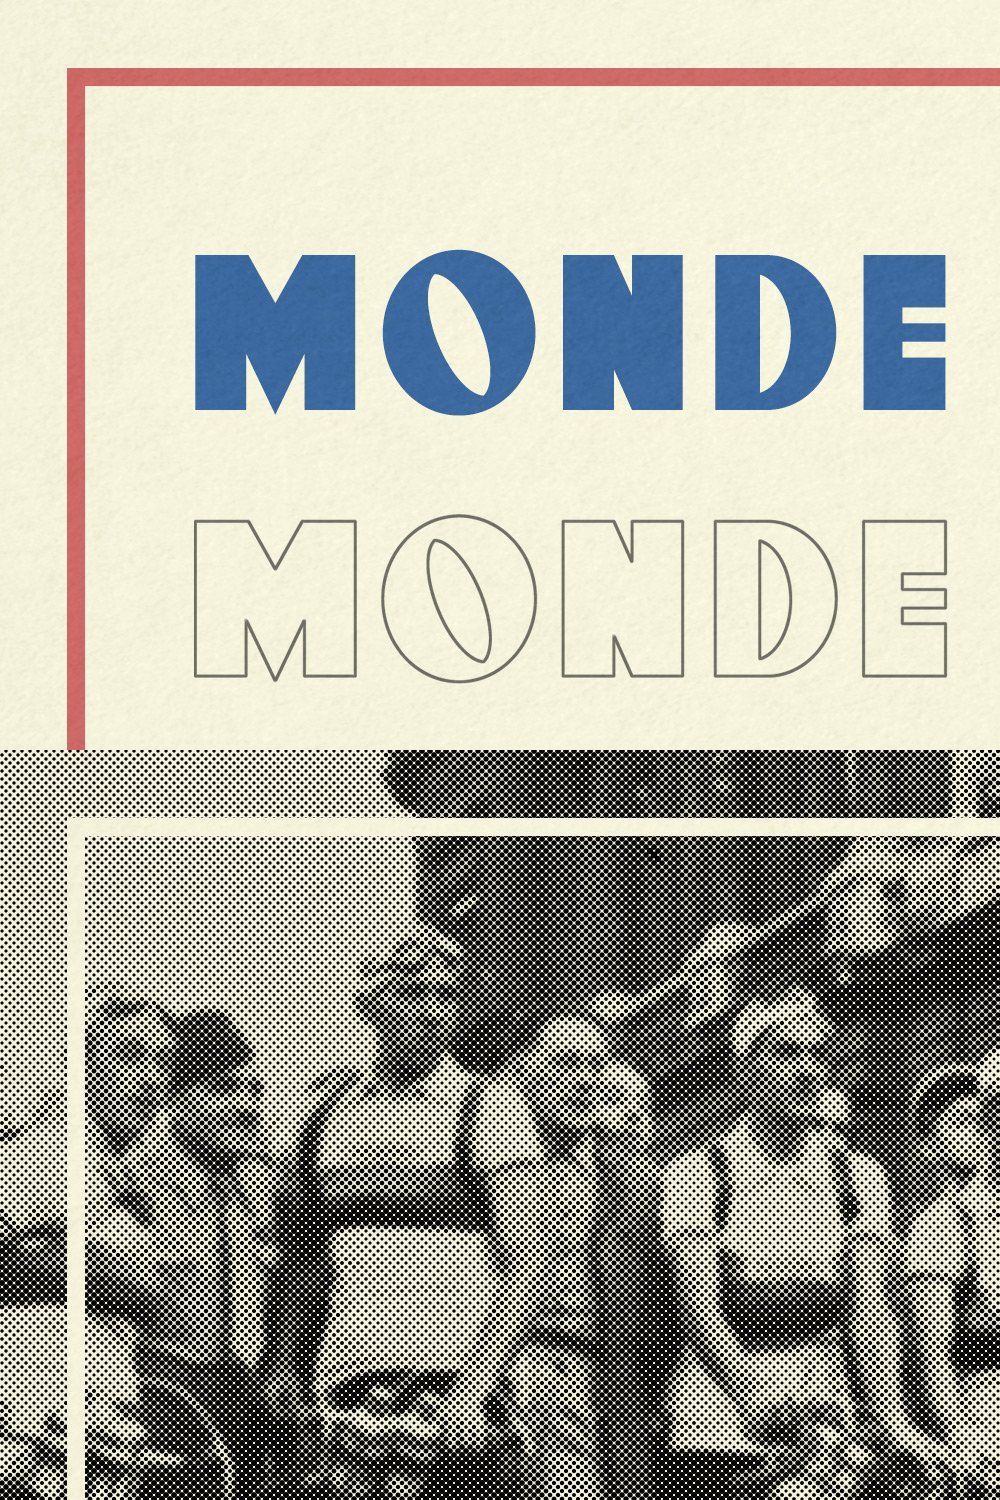 Monde Libre pinterest preview image.